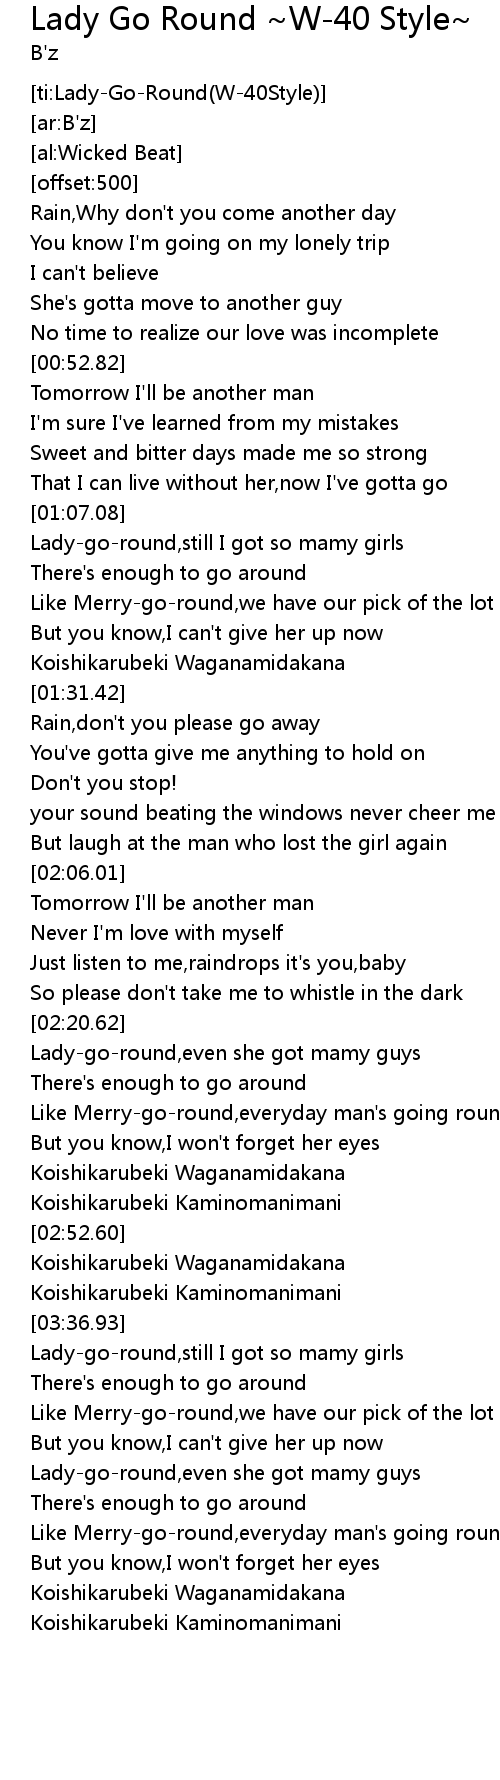 Lady Go Round W 40 Style Lyrics Follow Lyrics